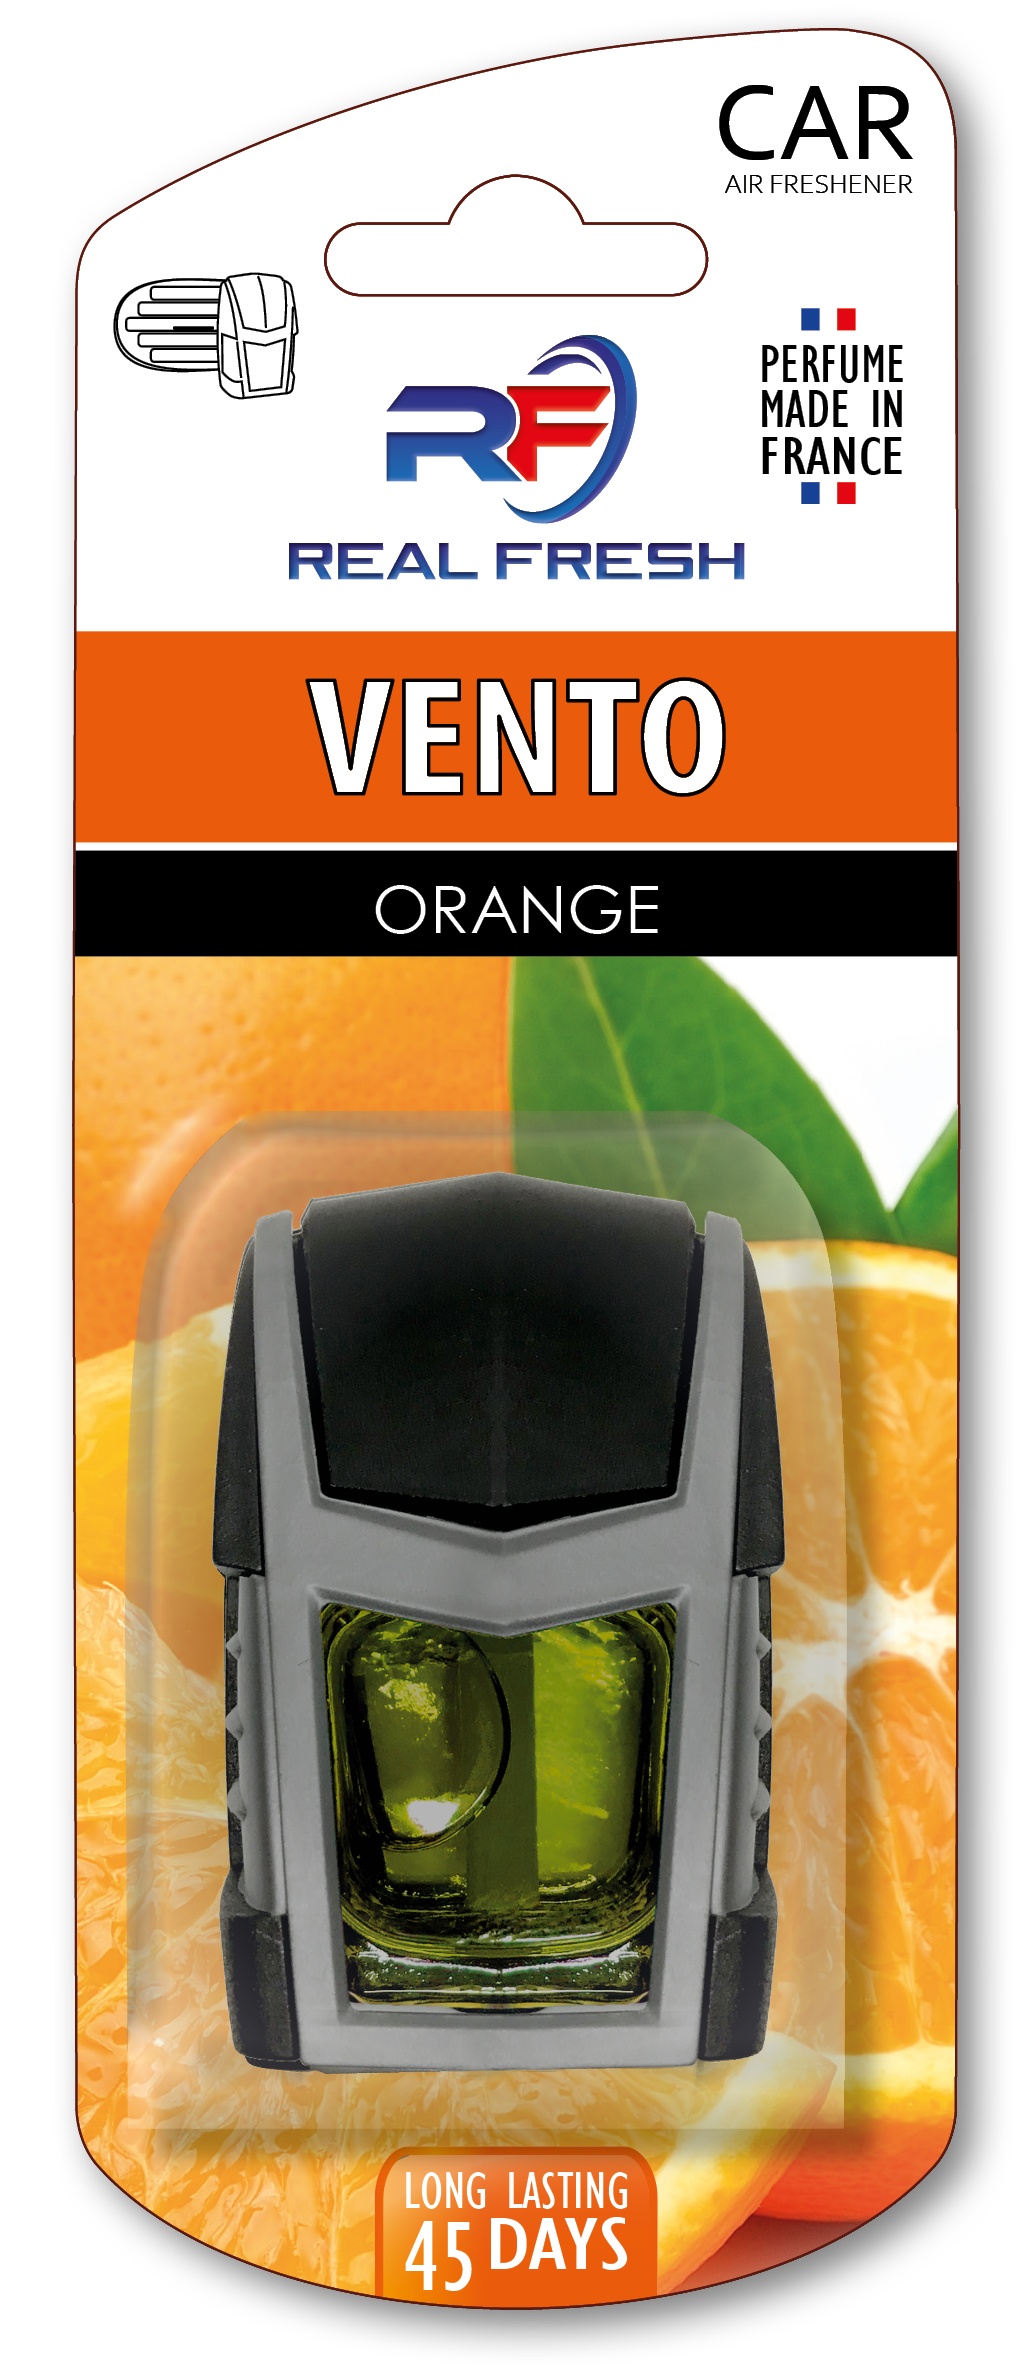 Vento Orange Image